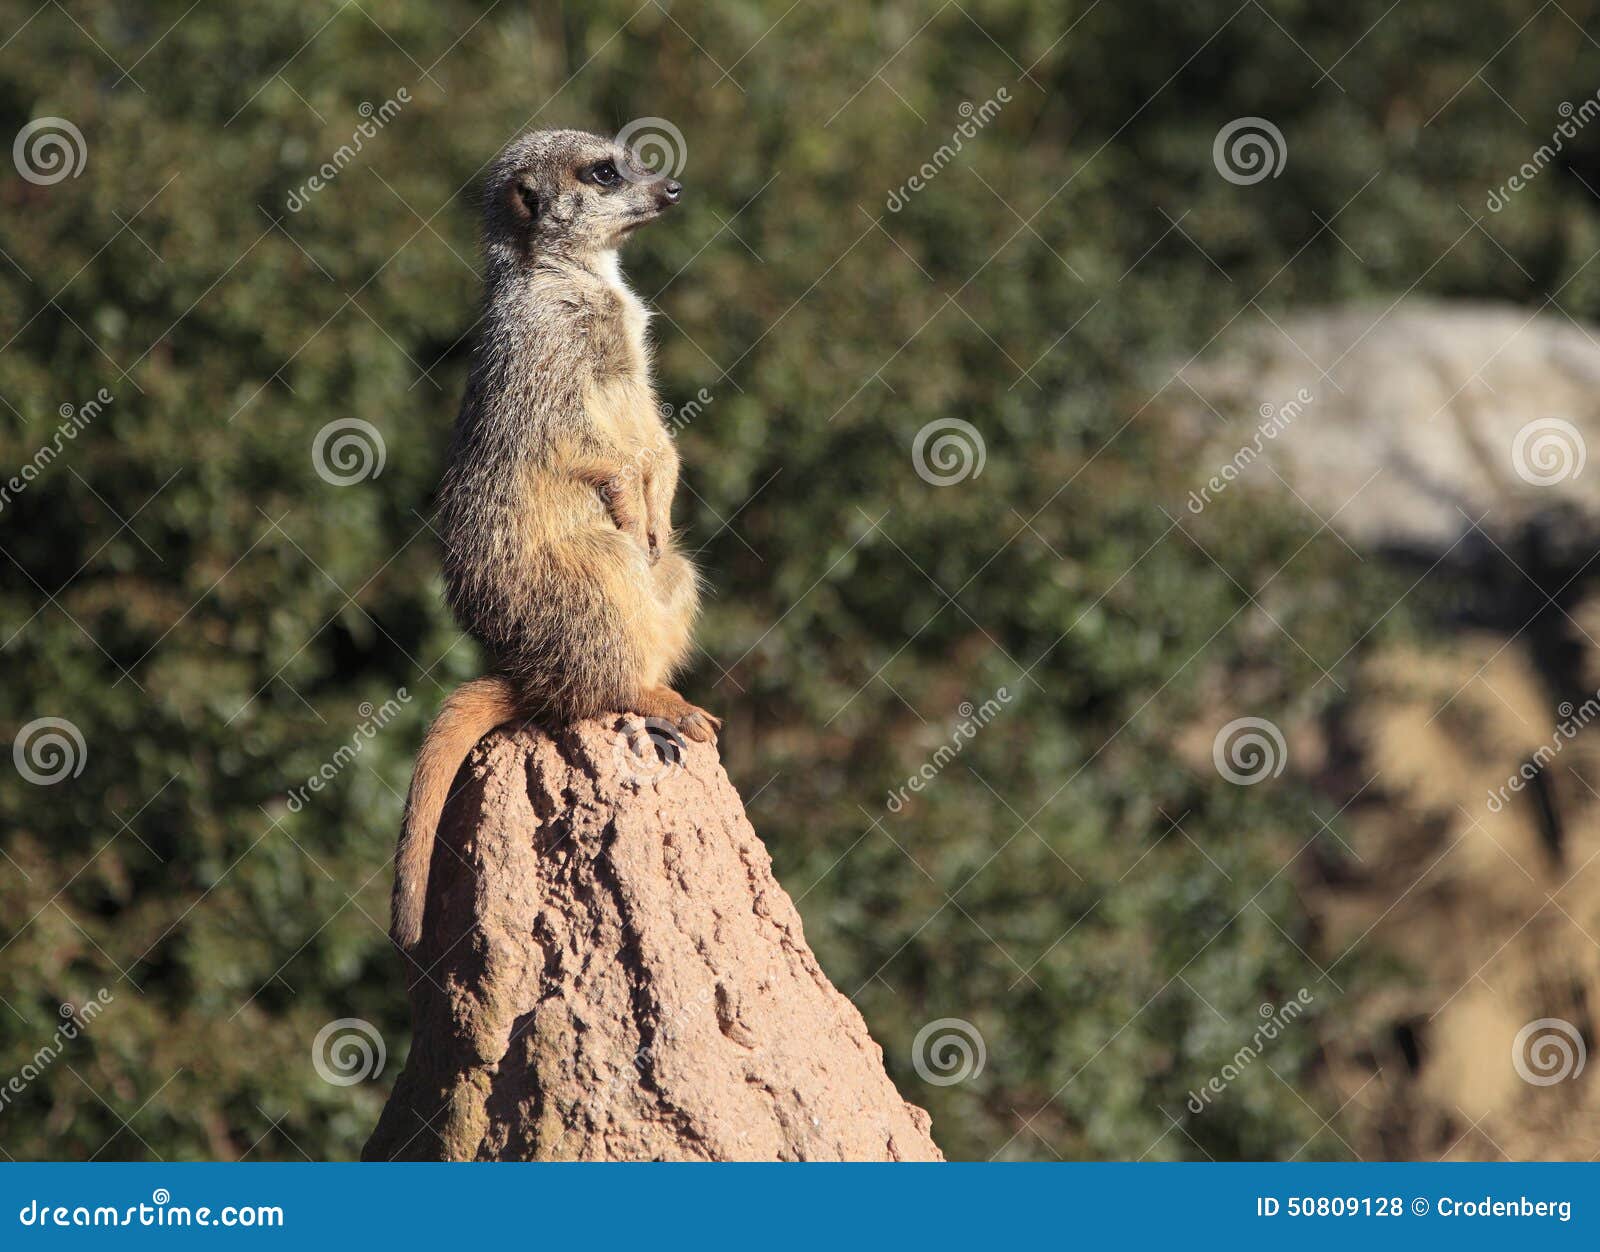 meercat on a rock